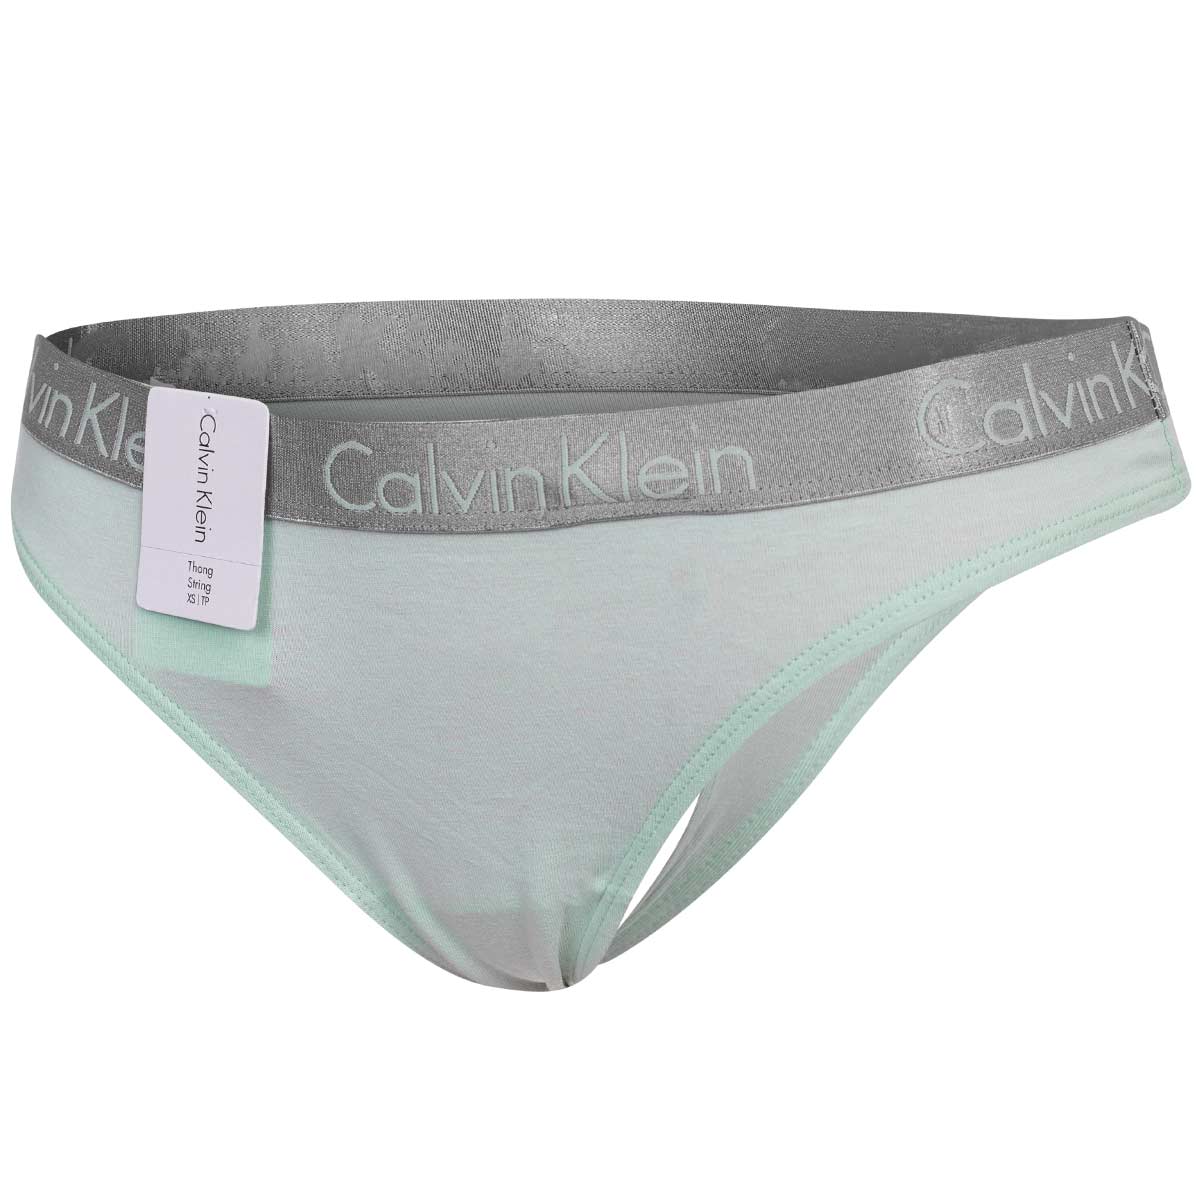 Calvin Klein Underwear Woman's Thong Brief 000QD3539EL41